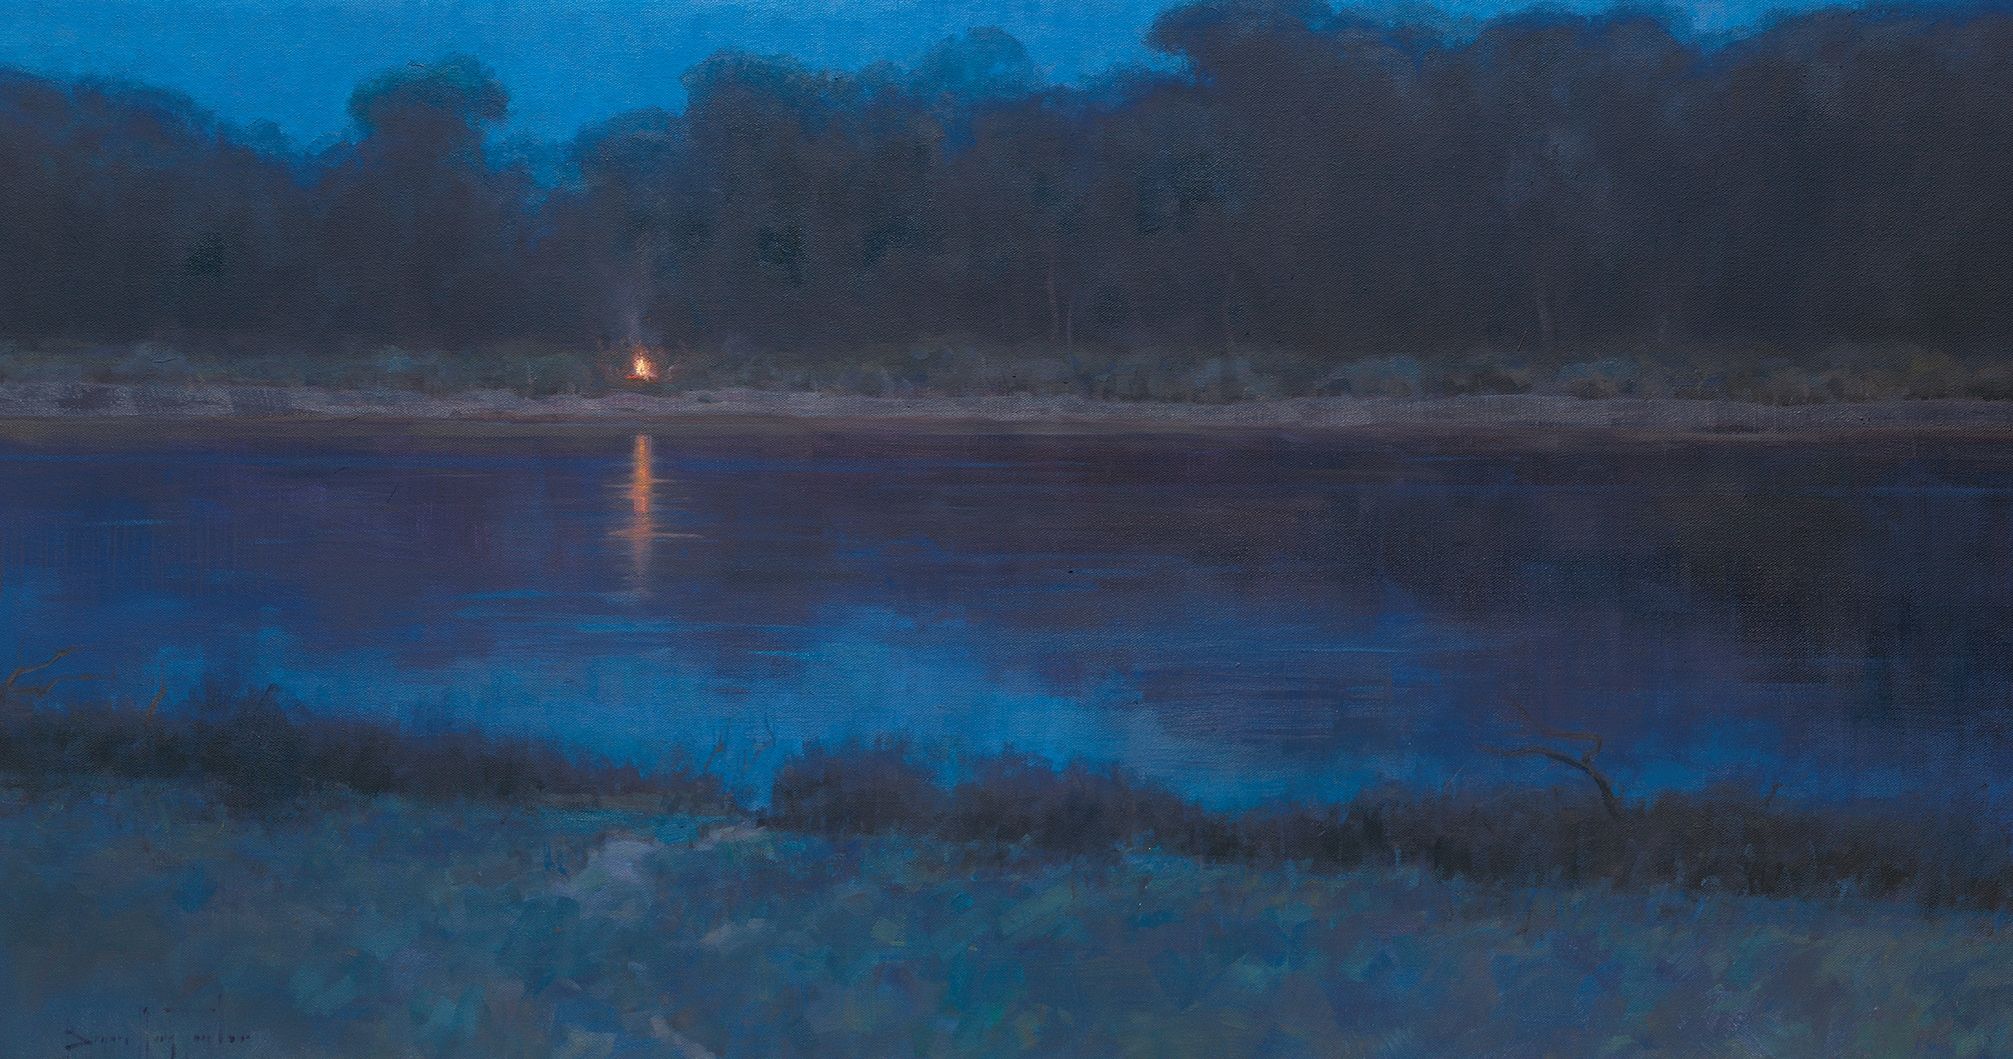 Campfire on the Missouri, by Bryan Mark Taylor. Image via Church of Jesus Christ.